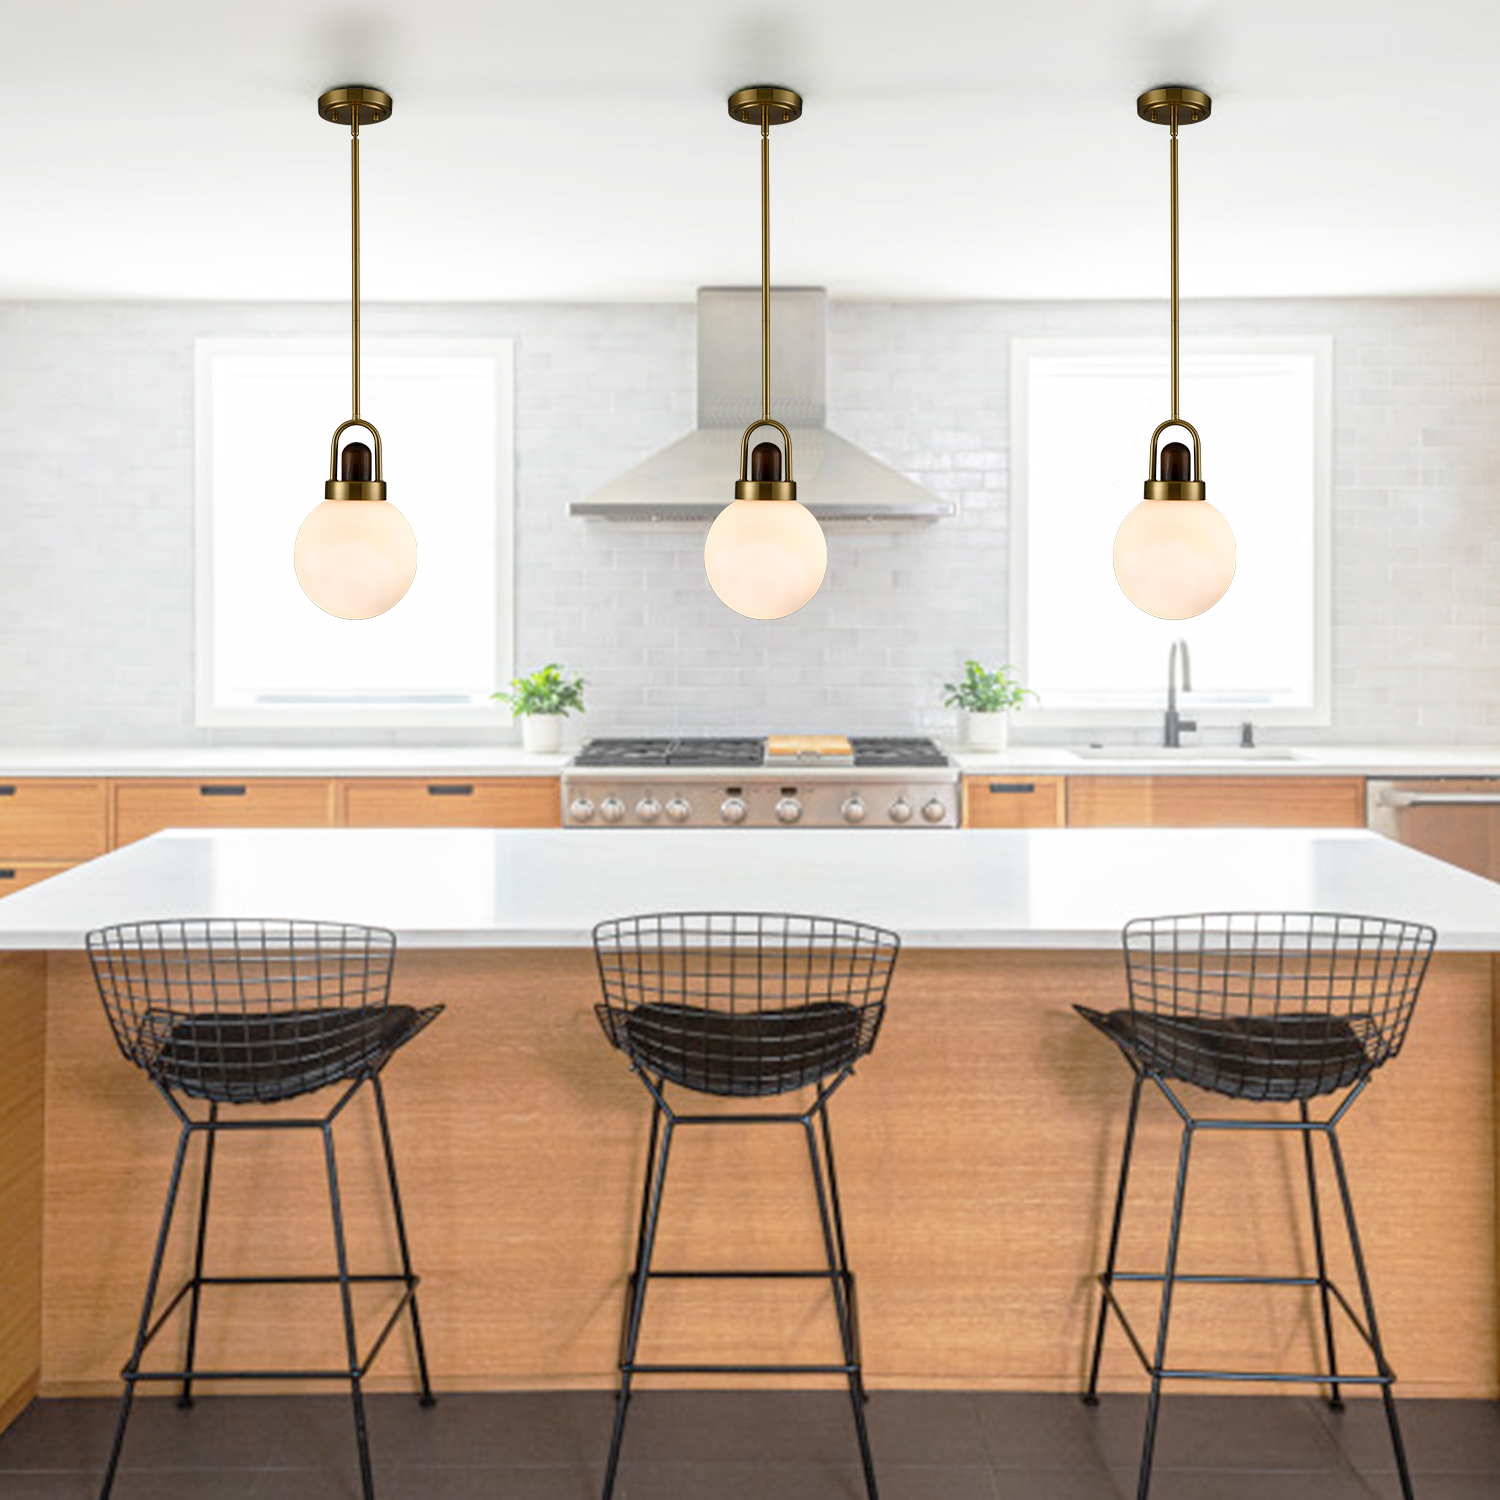 8 Modern Pendant Lighting Ideas That Make Your Kitchen Elegant